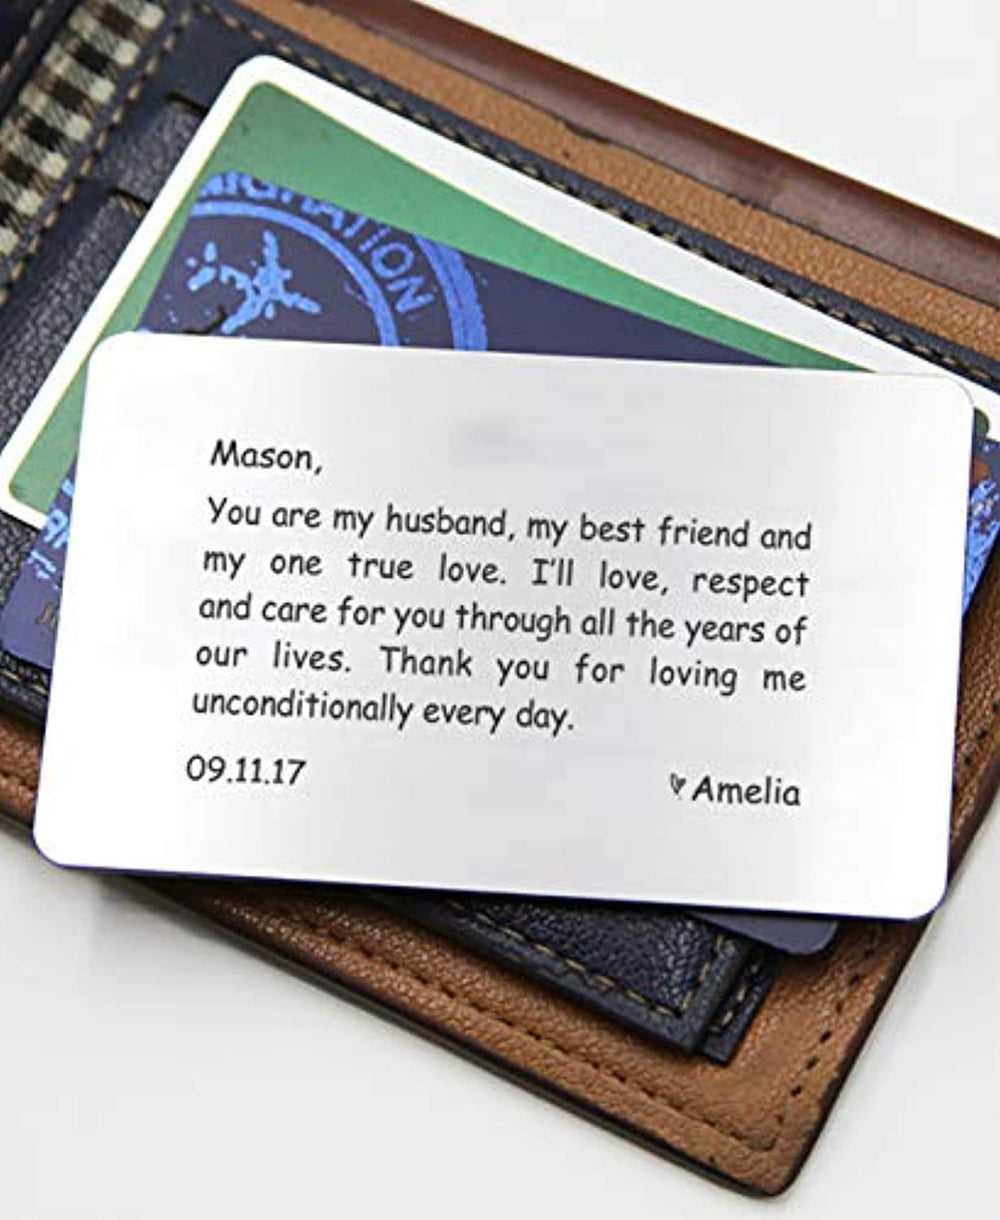 Cute Things to Get Your Boyfriend, Boyfriend Wallet Card Insert